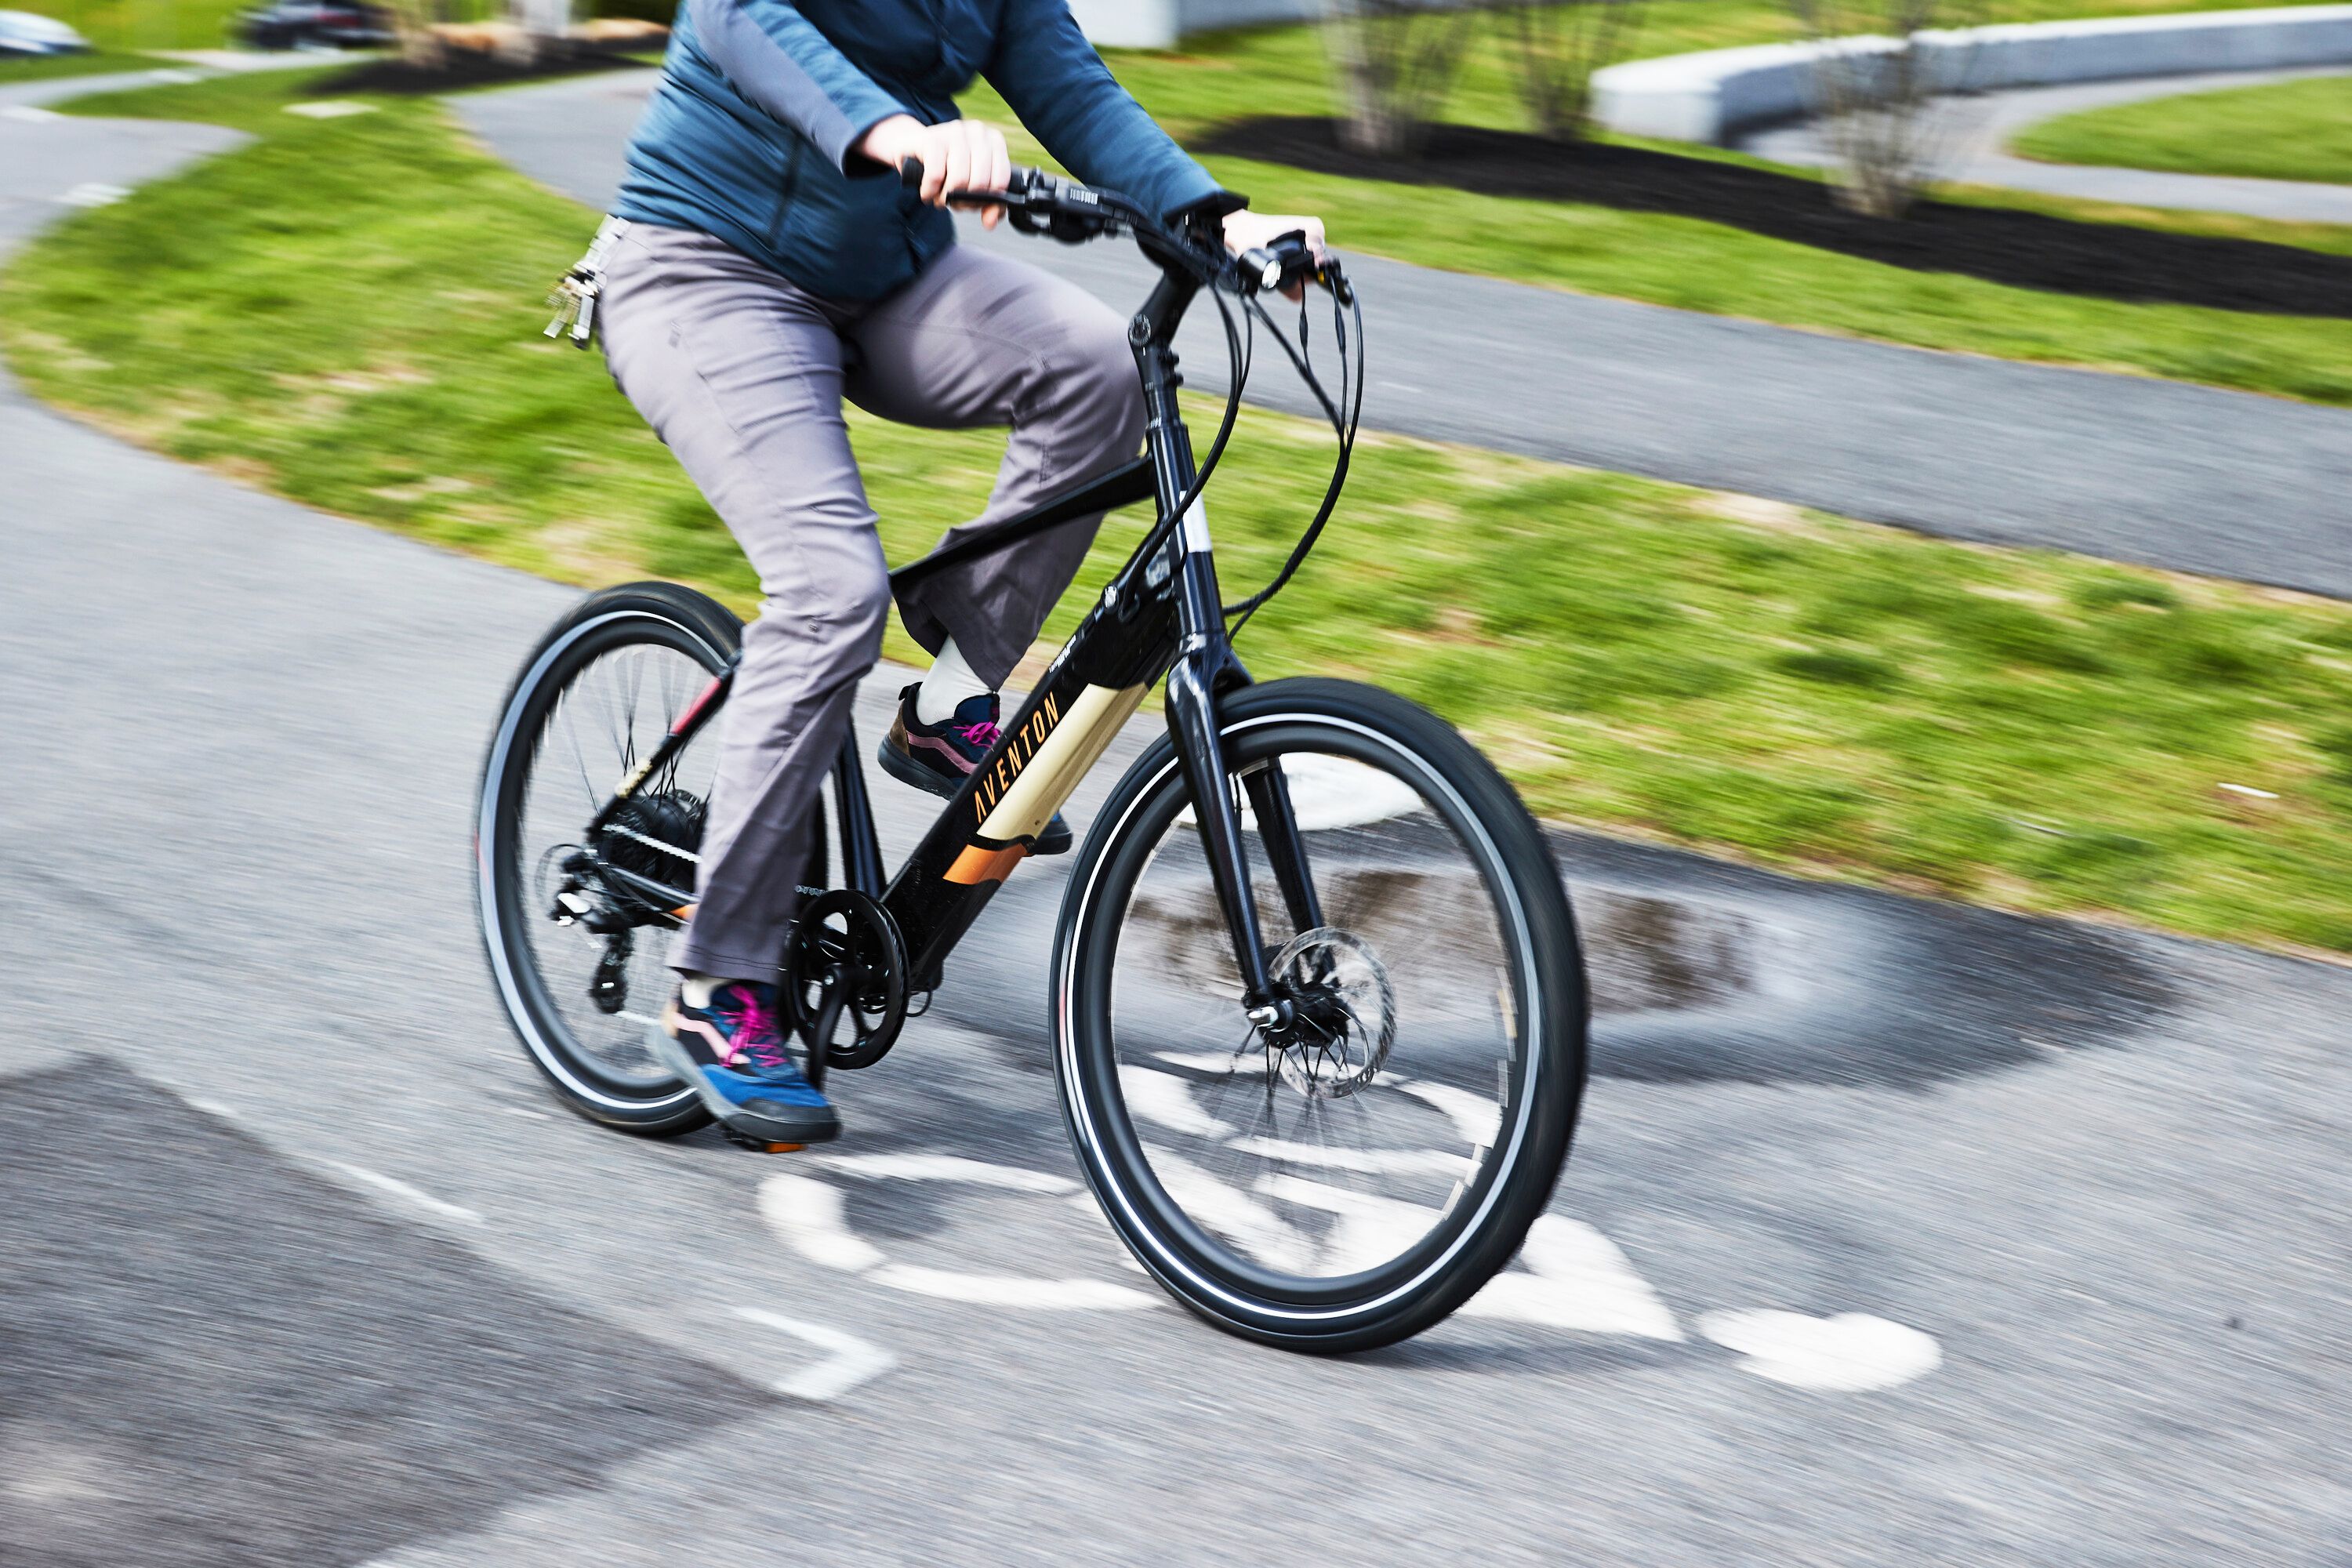 Smart eBike Ride: Electric Bike The Best Vehicle Smart Makes?